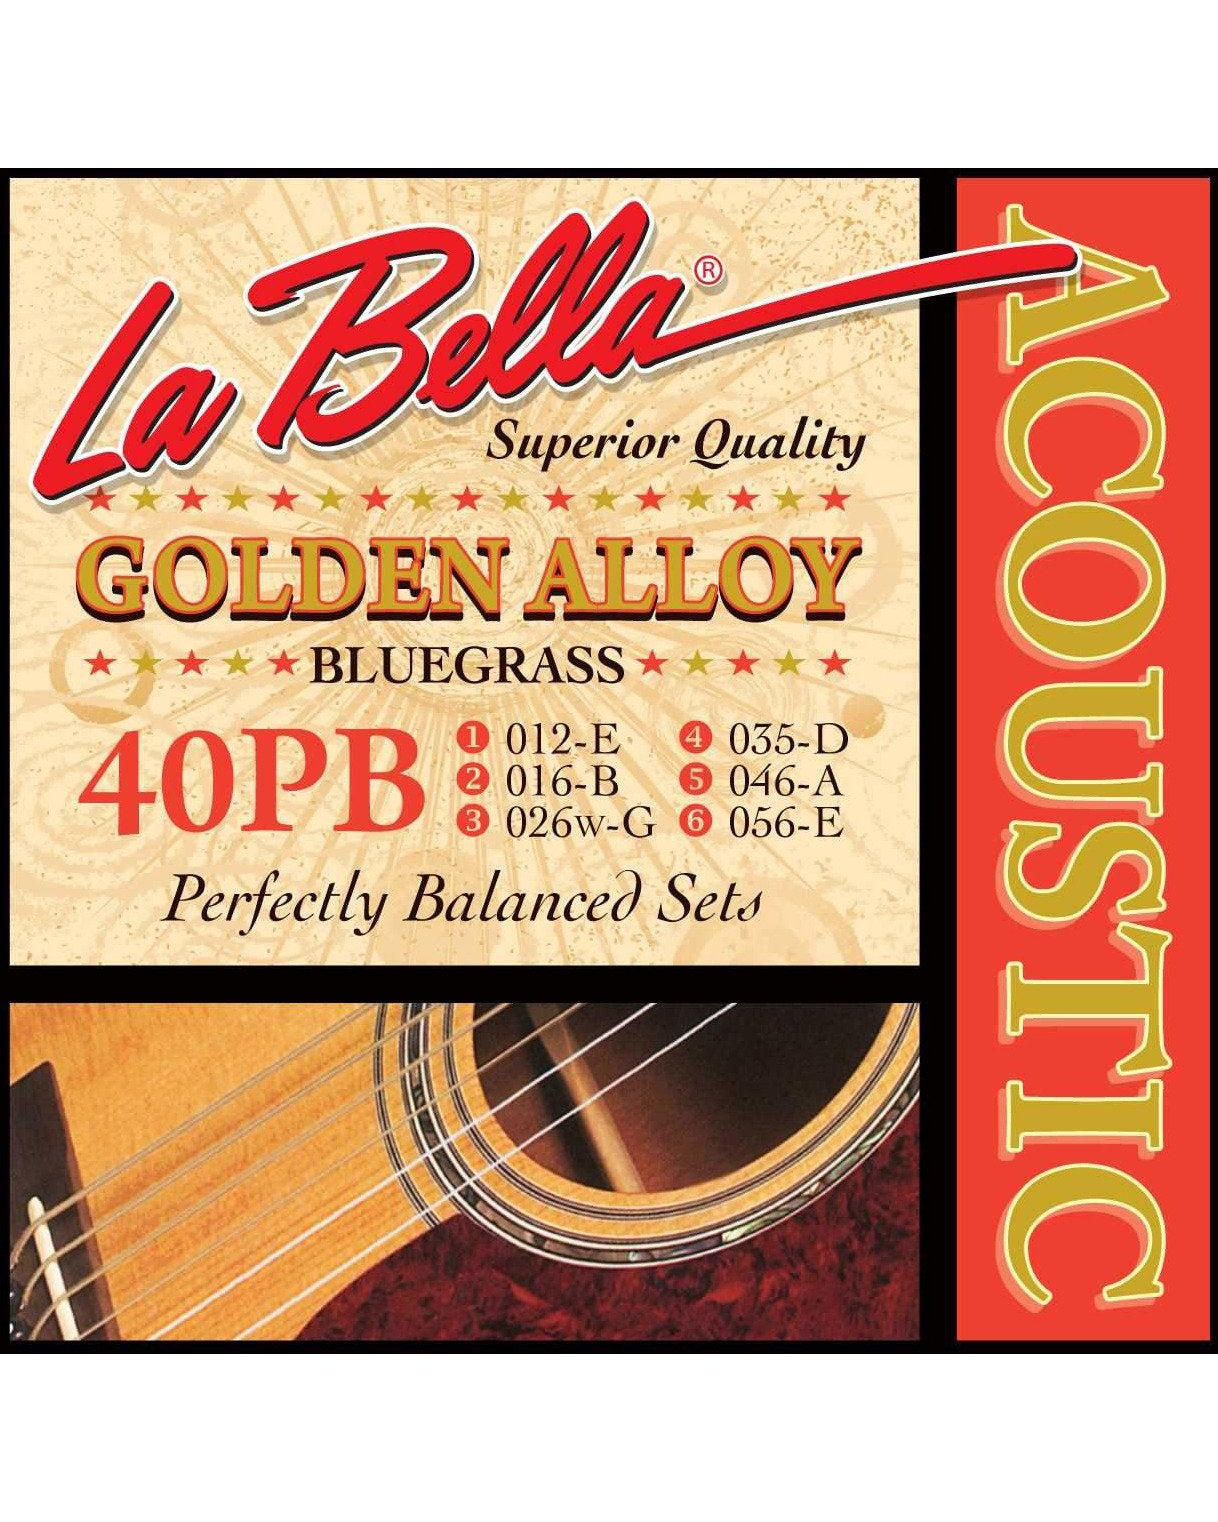 Image 1 of La Bella 40PB Golden Alloy Bluegrass Gauge Acoustic Guitar Strings - SKU# 40PB : Product Type Strings : Elderly Instruments